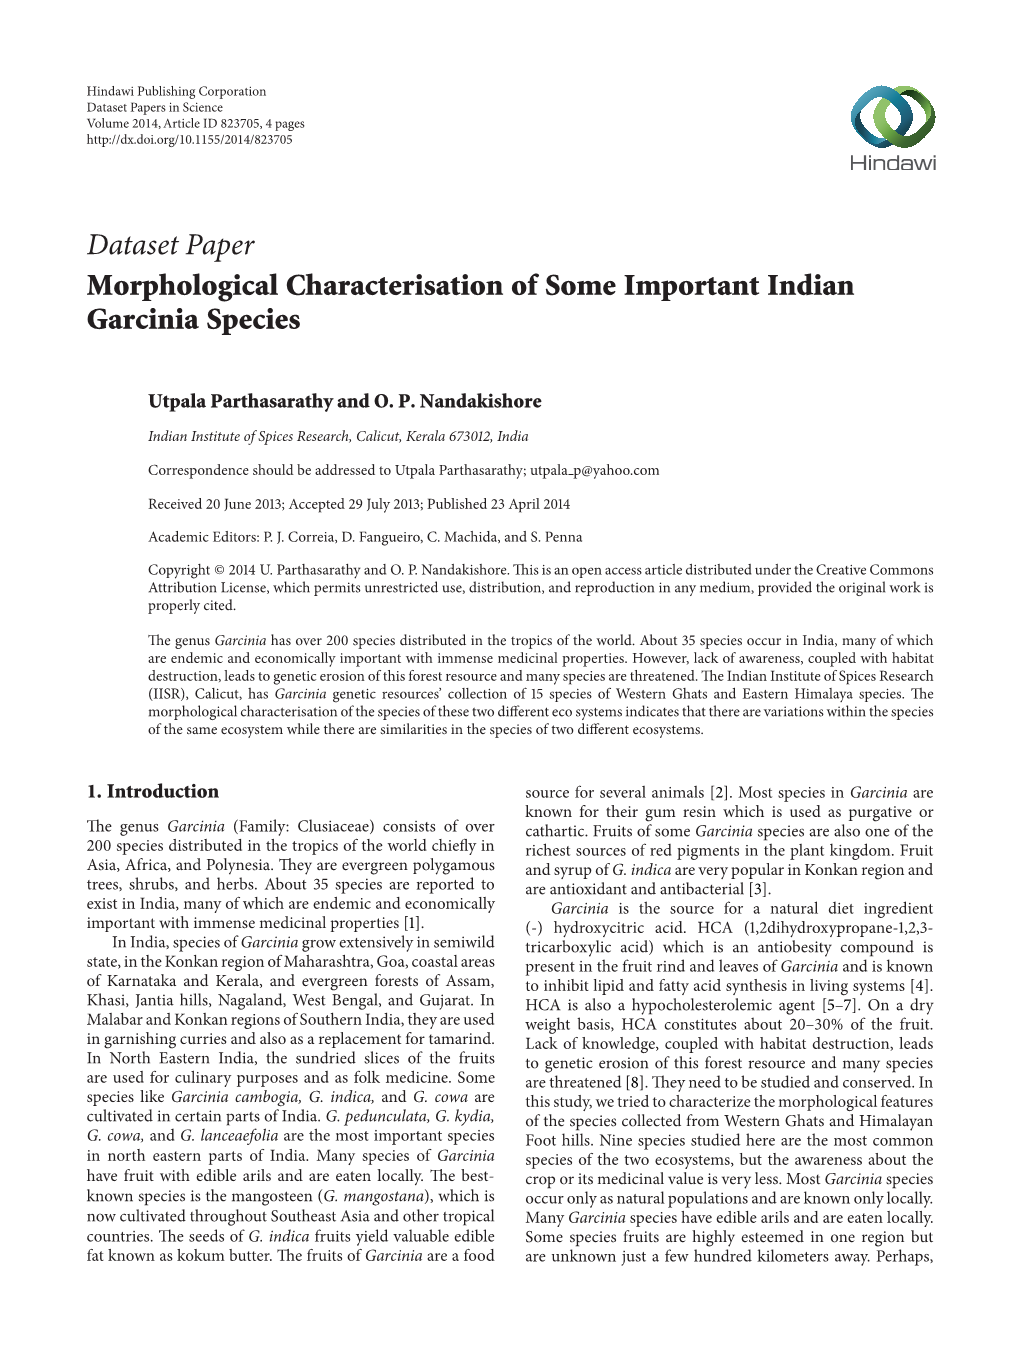 Dataset Paper Morphological Characterisation of Some Important Indian Garcinia Species